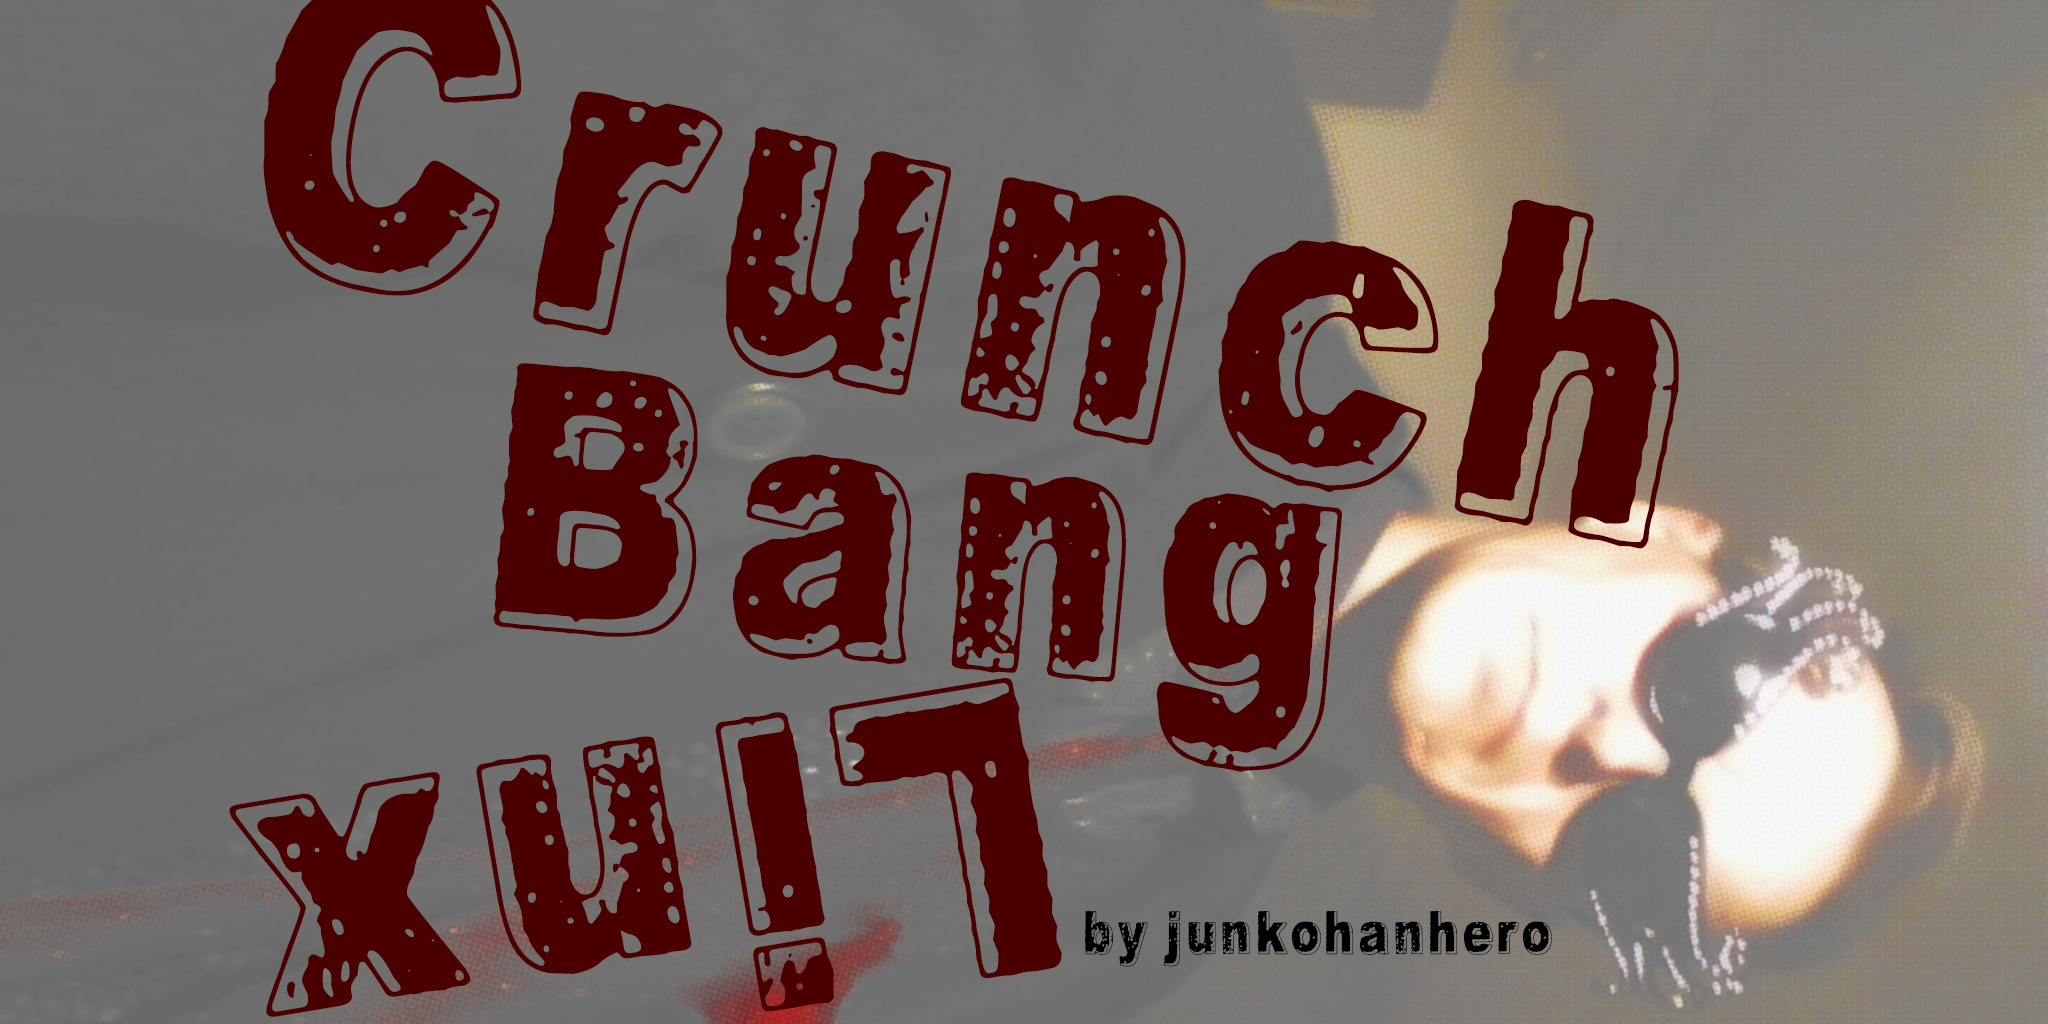 Crunch Bang Linx